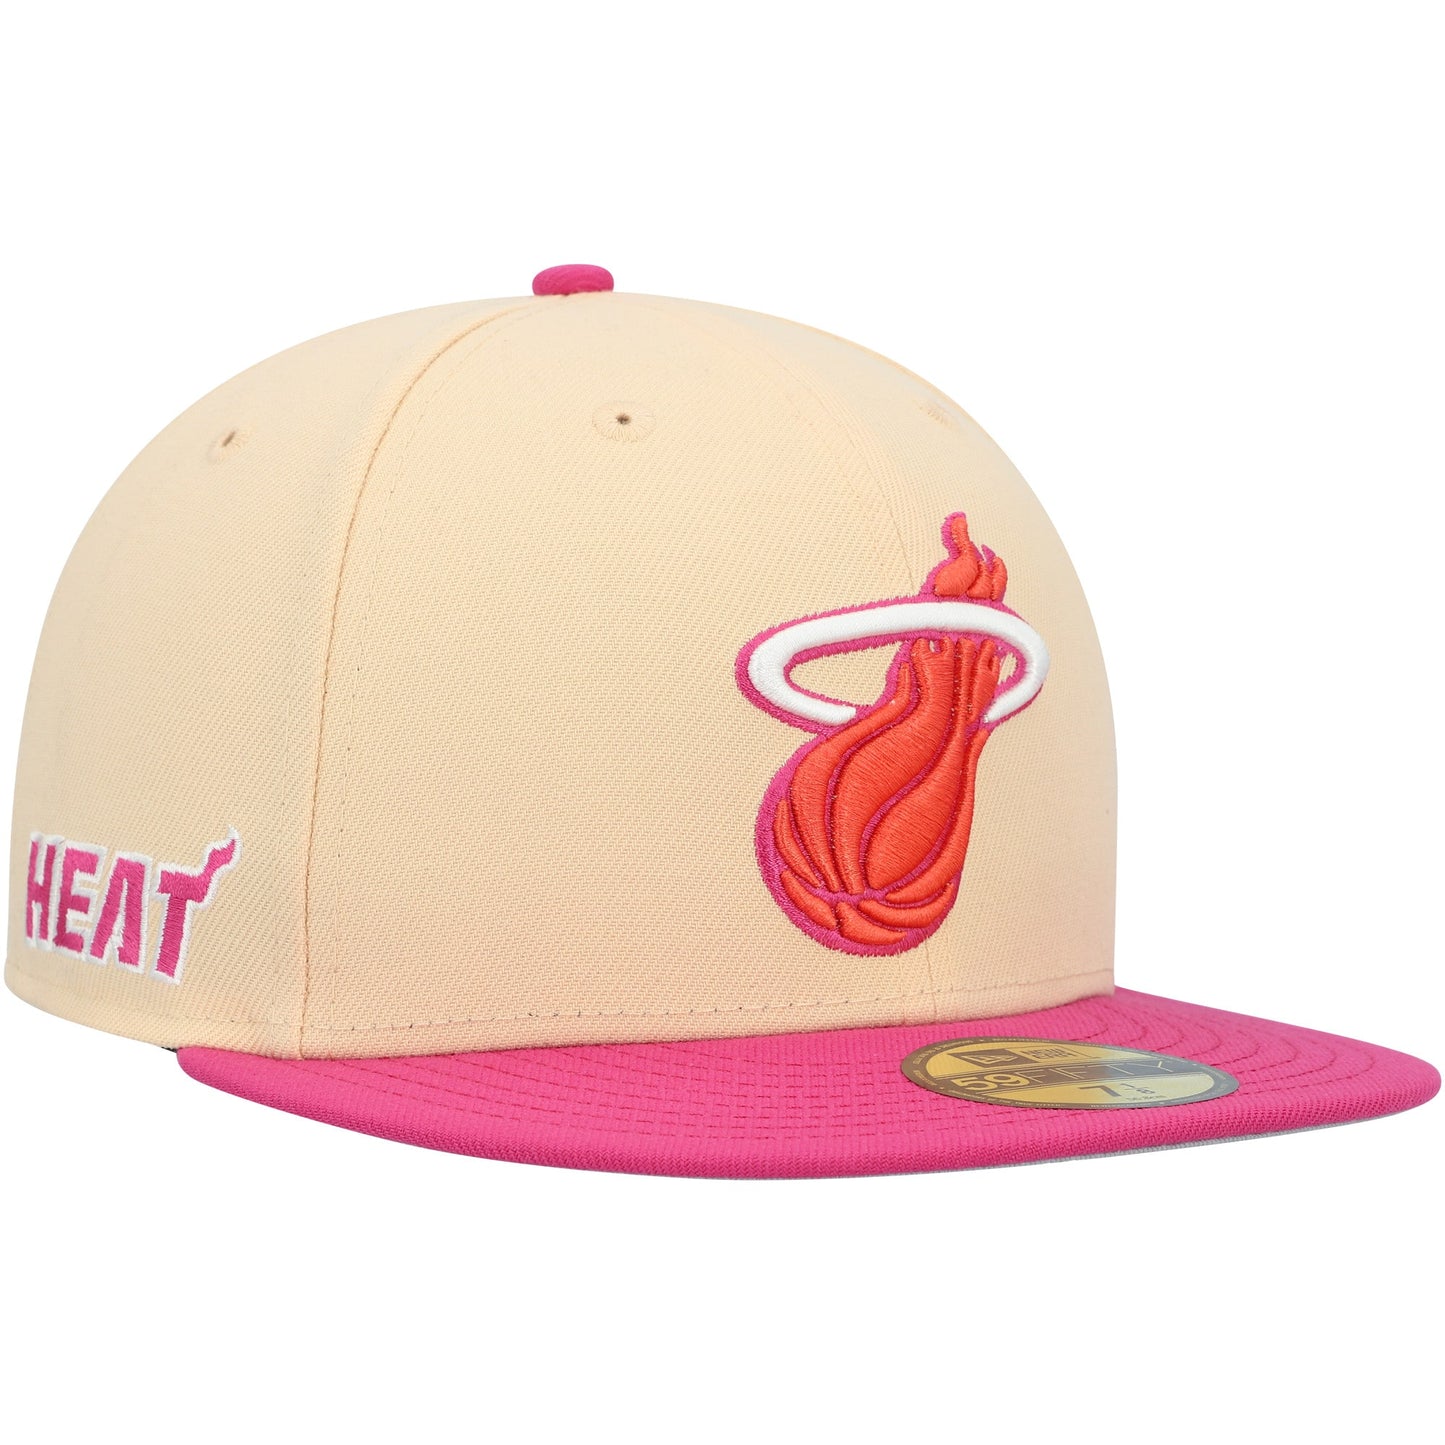 Miami Heat New Era Passion Mango 59FIFTY Fitted Hat - Orange/Pink